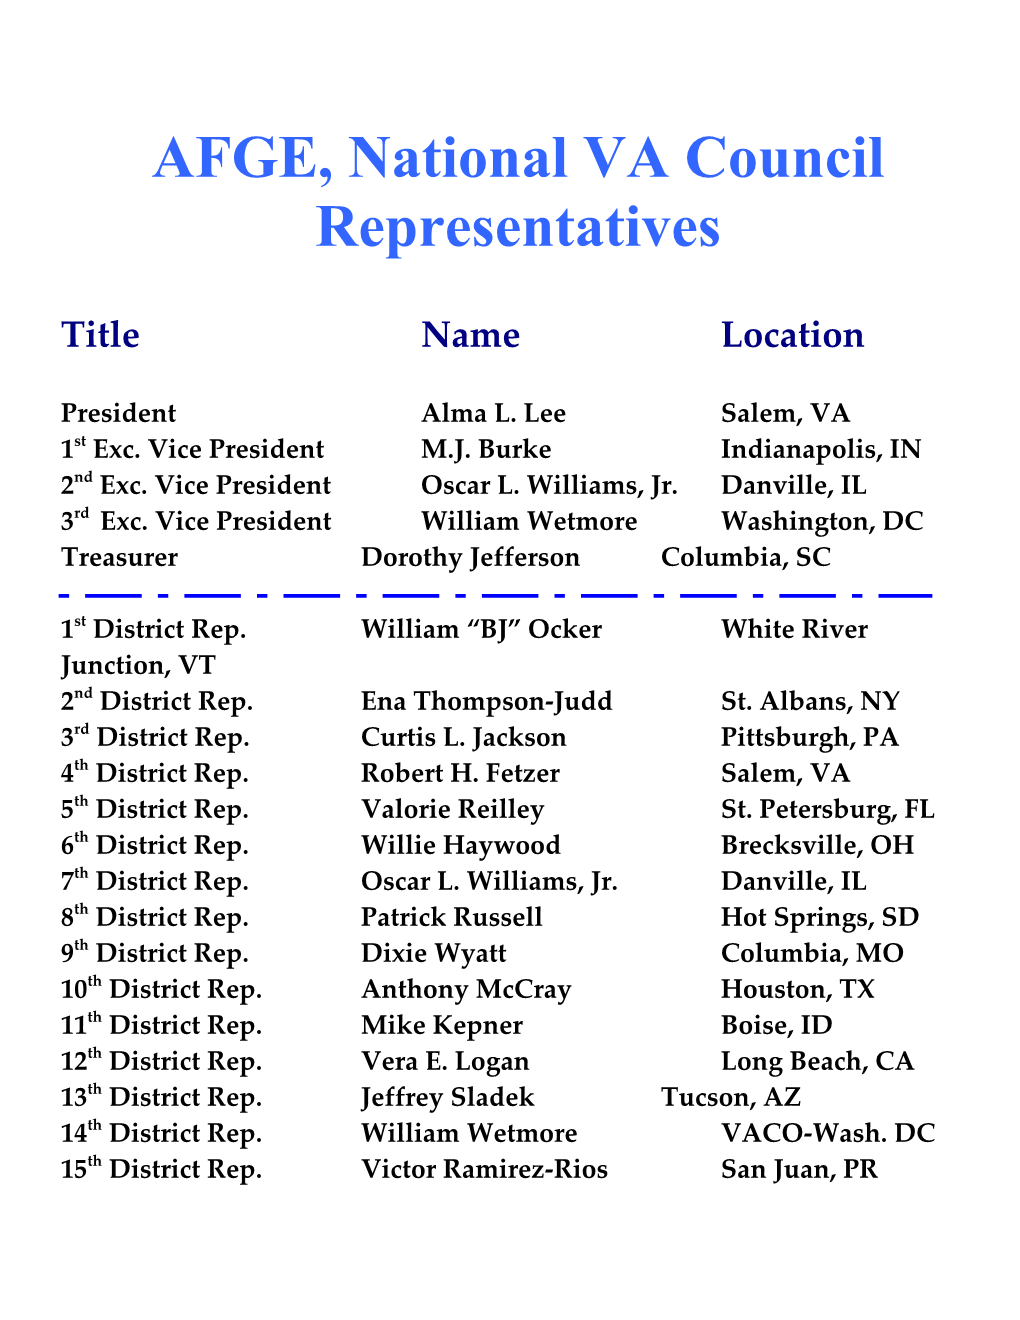 AFGE, National VA Council Representatives